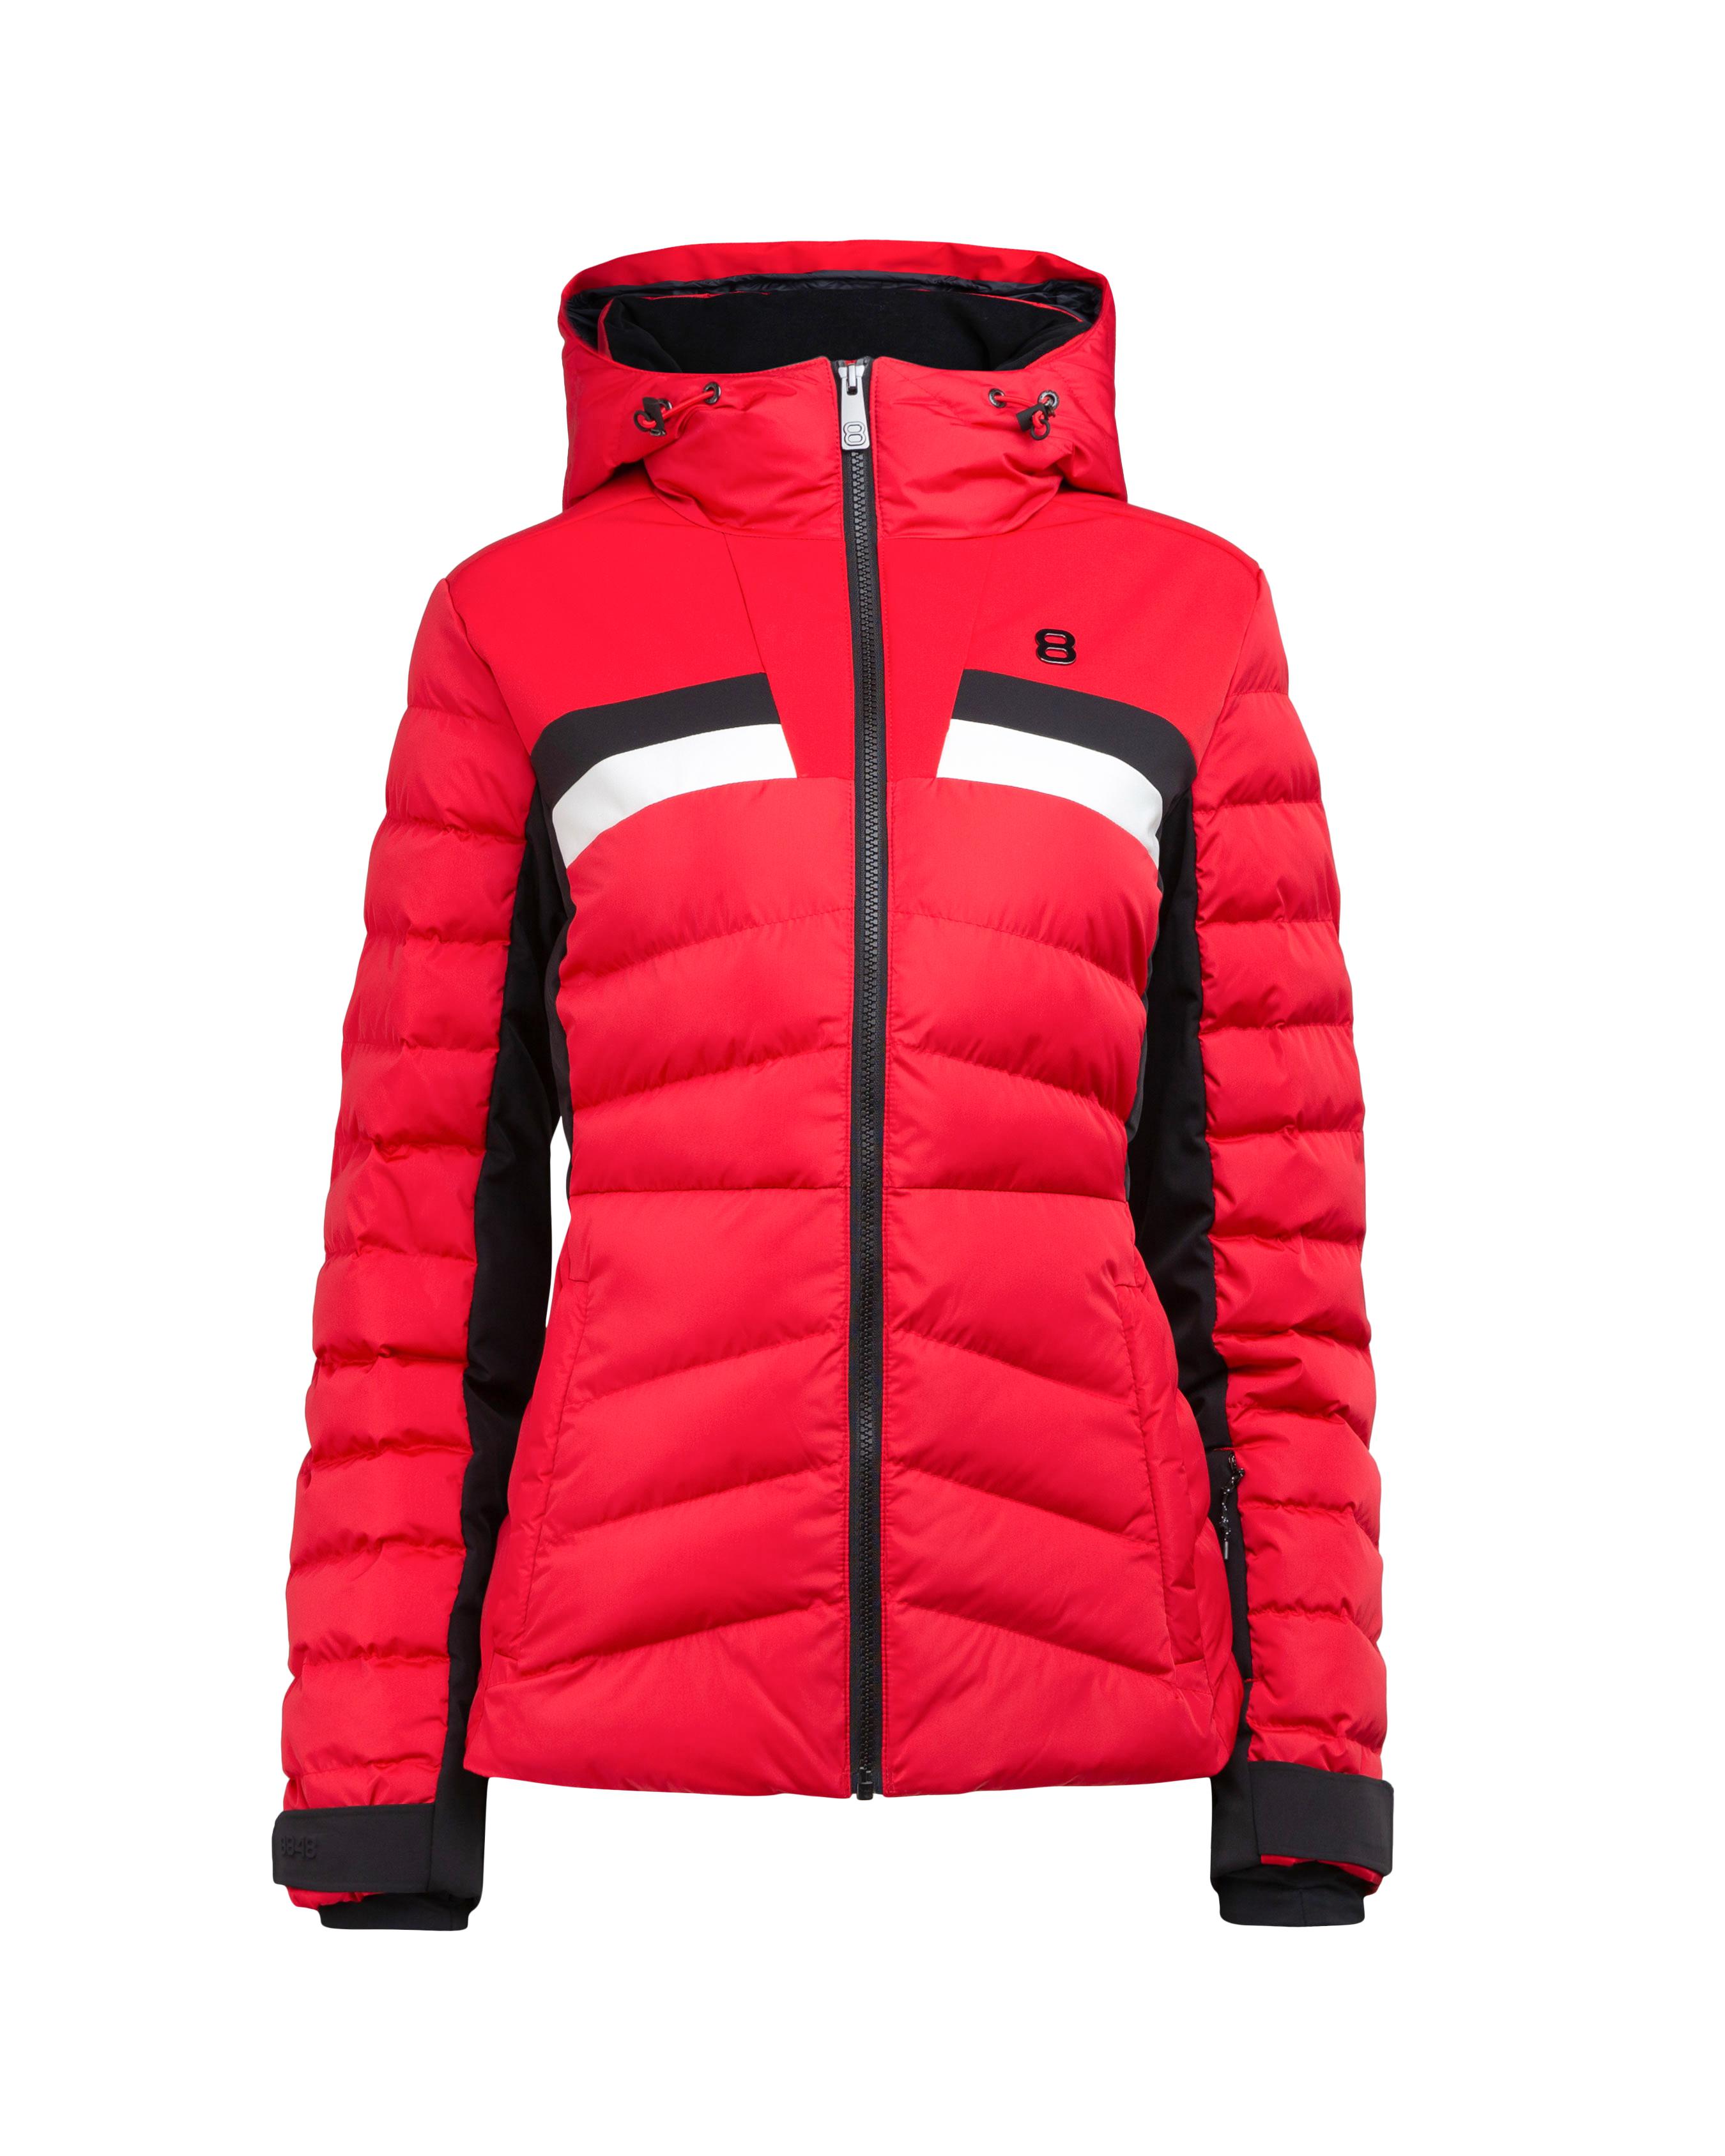 Lucia W Jacket Red - Red ski jacket women